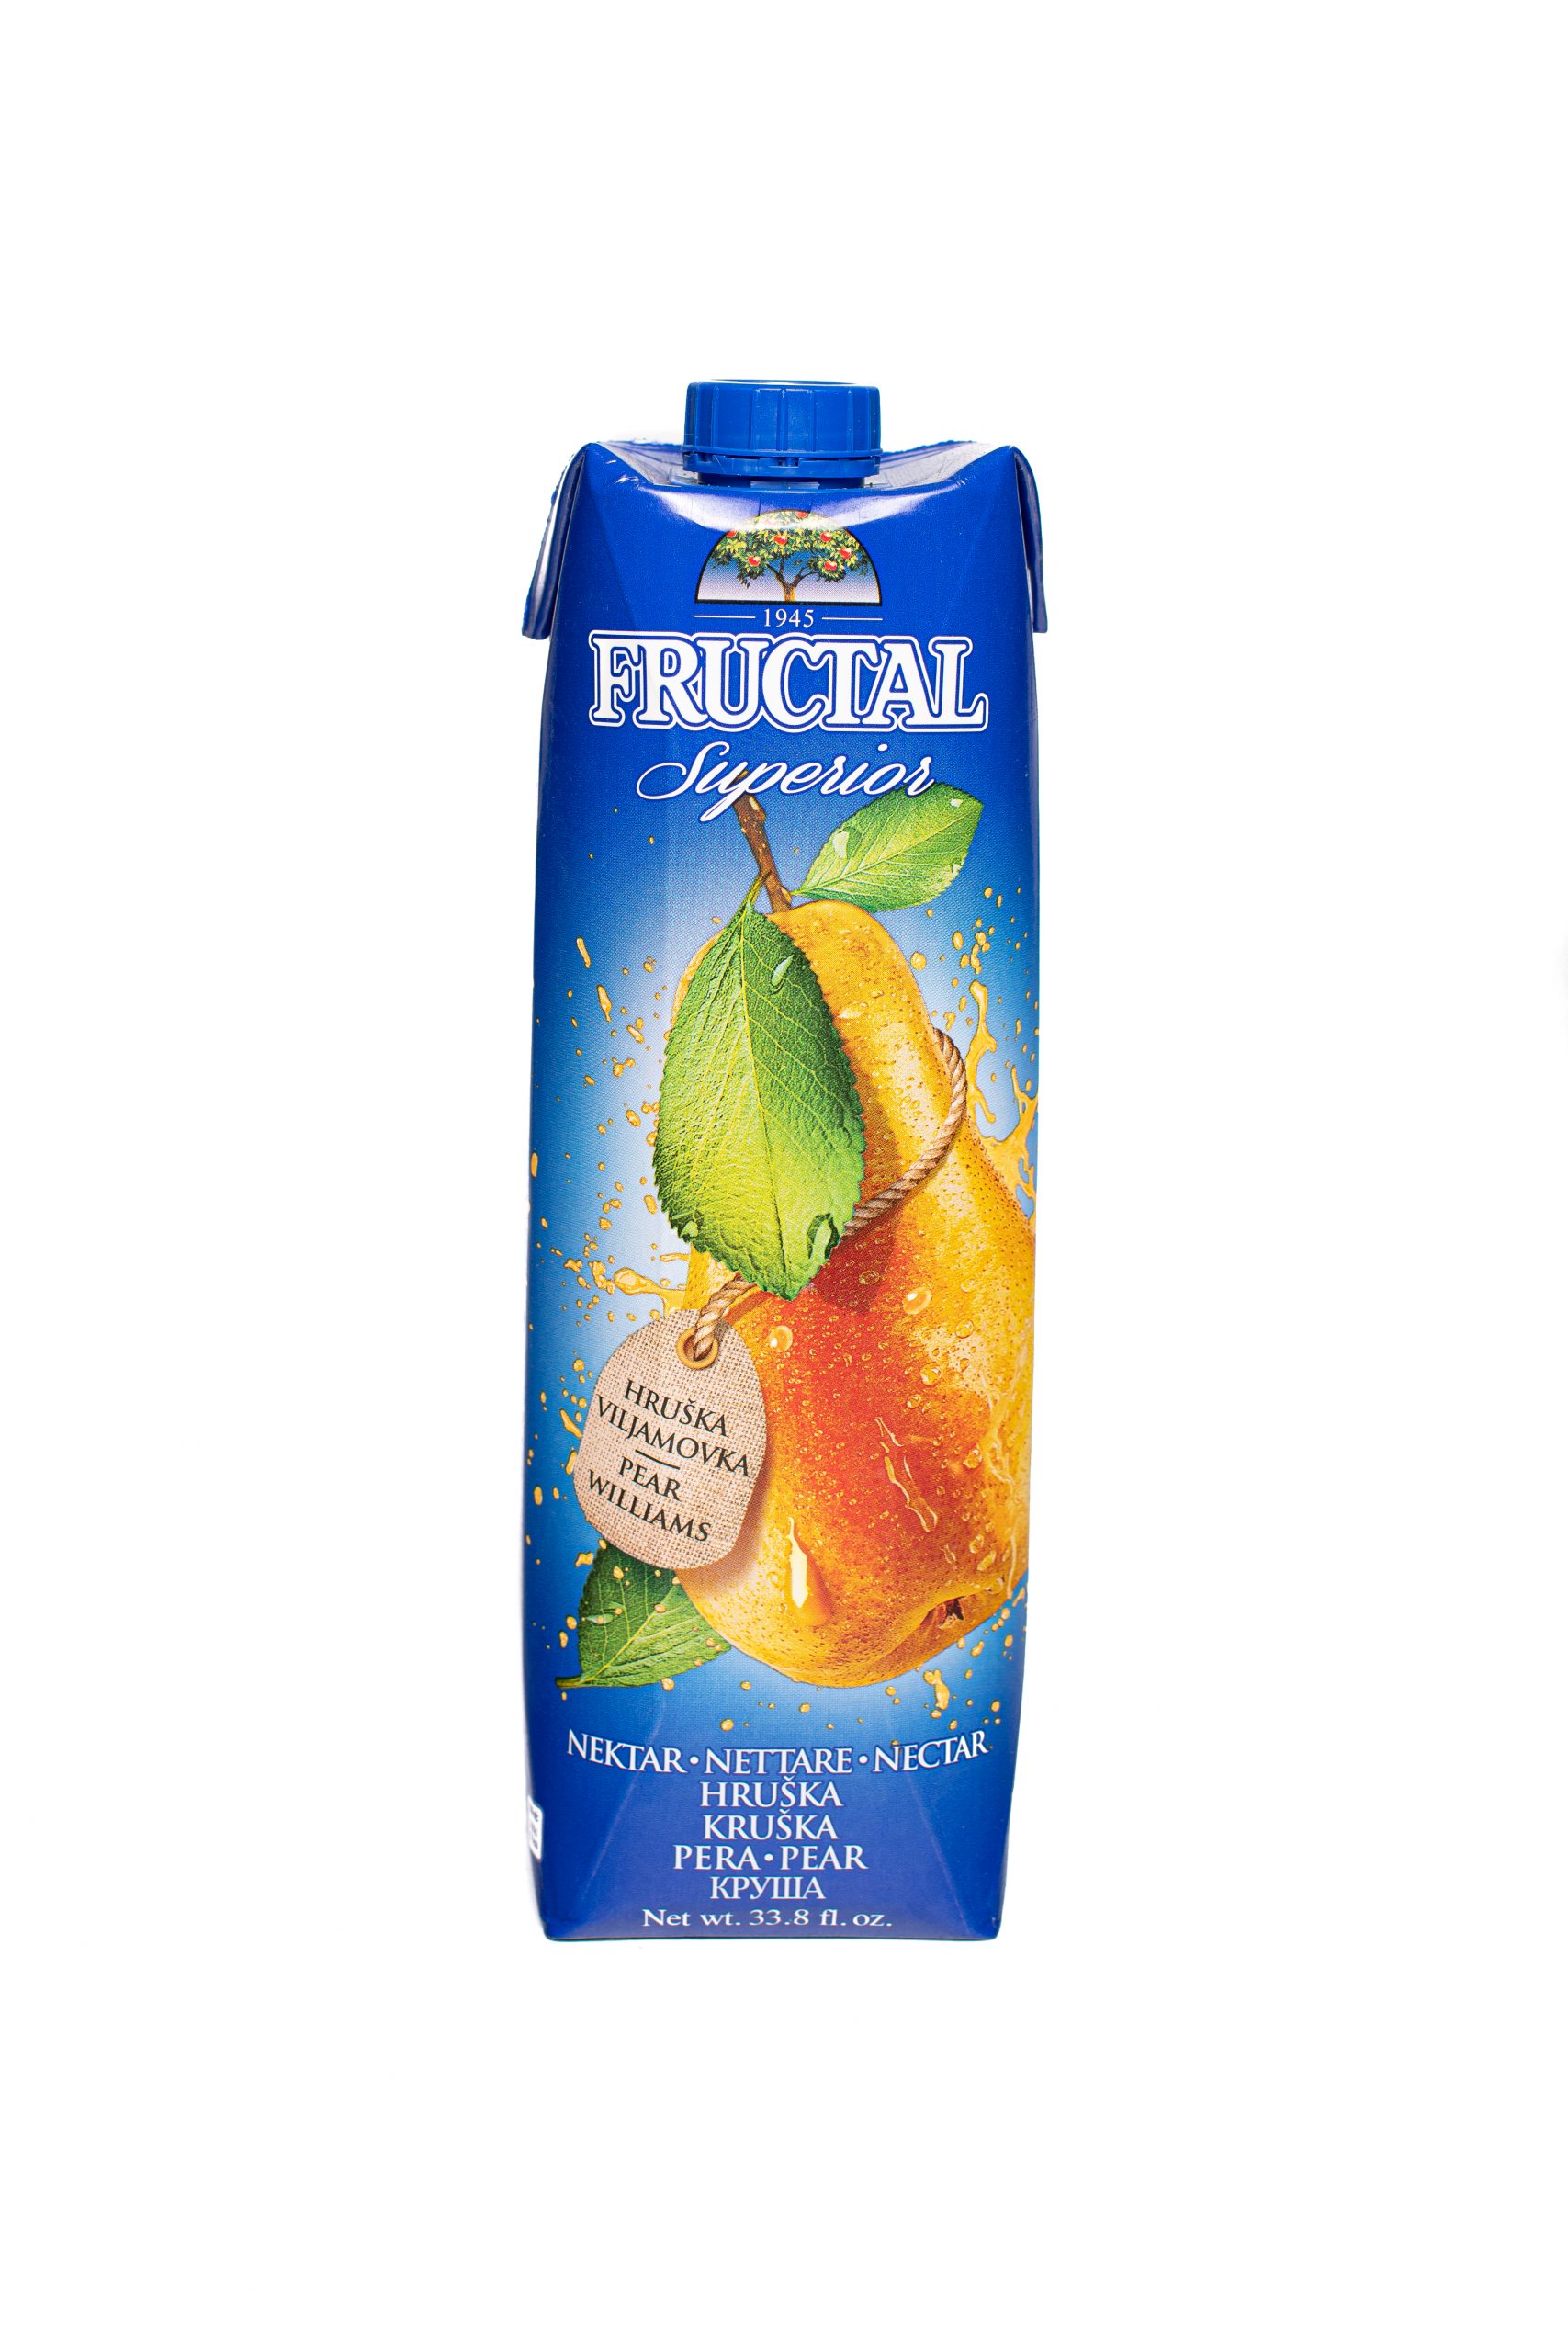 Fructal Superior | 1L | Pear